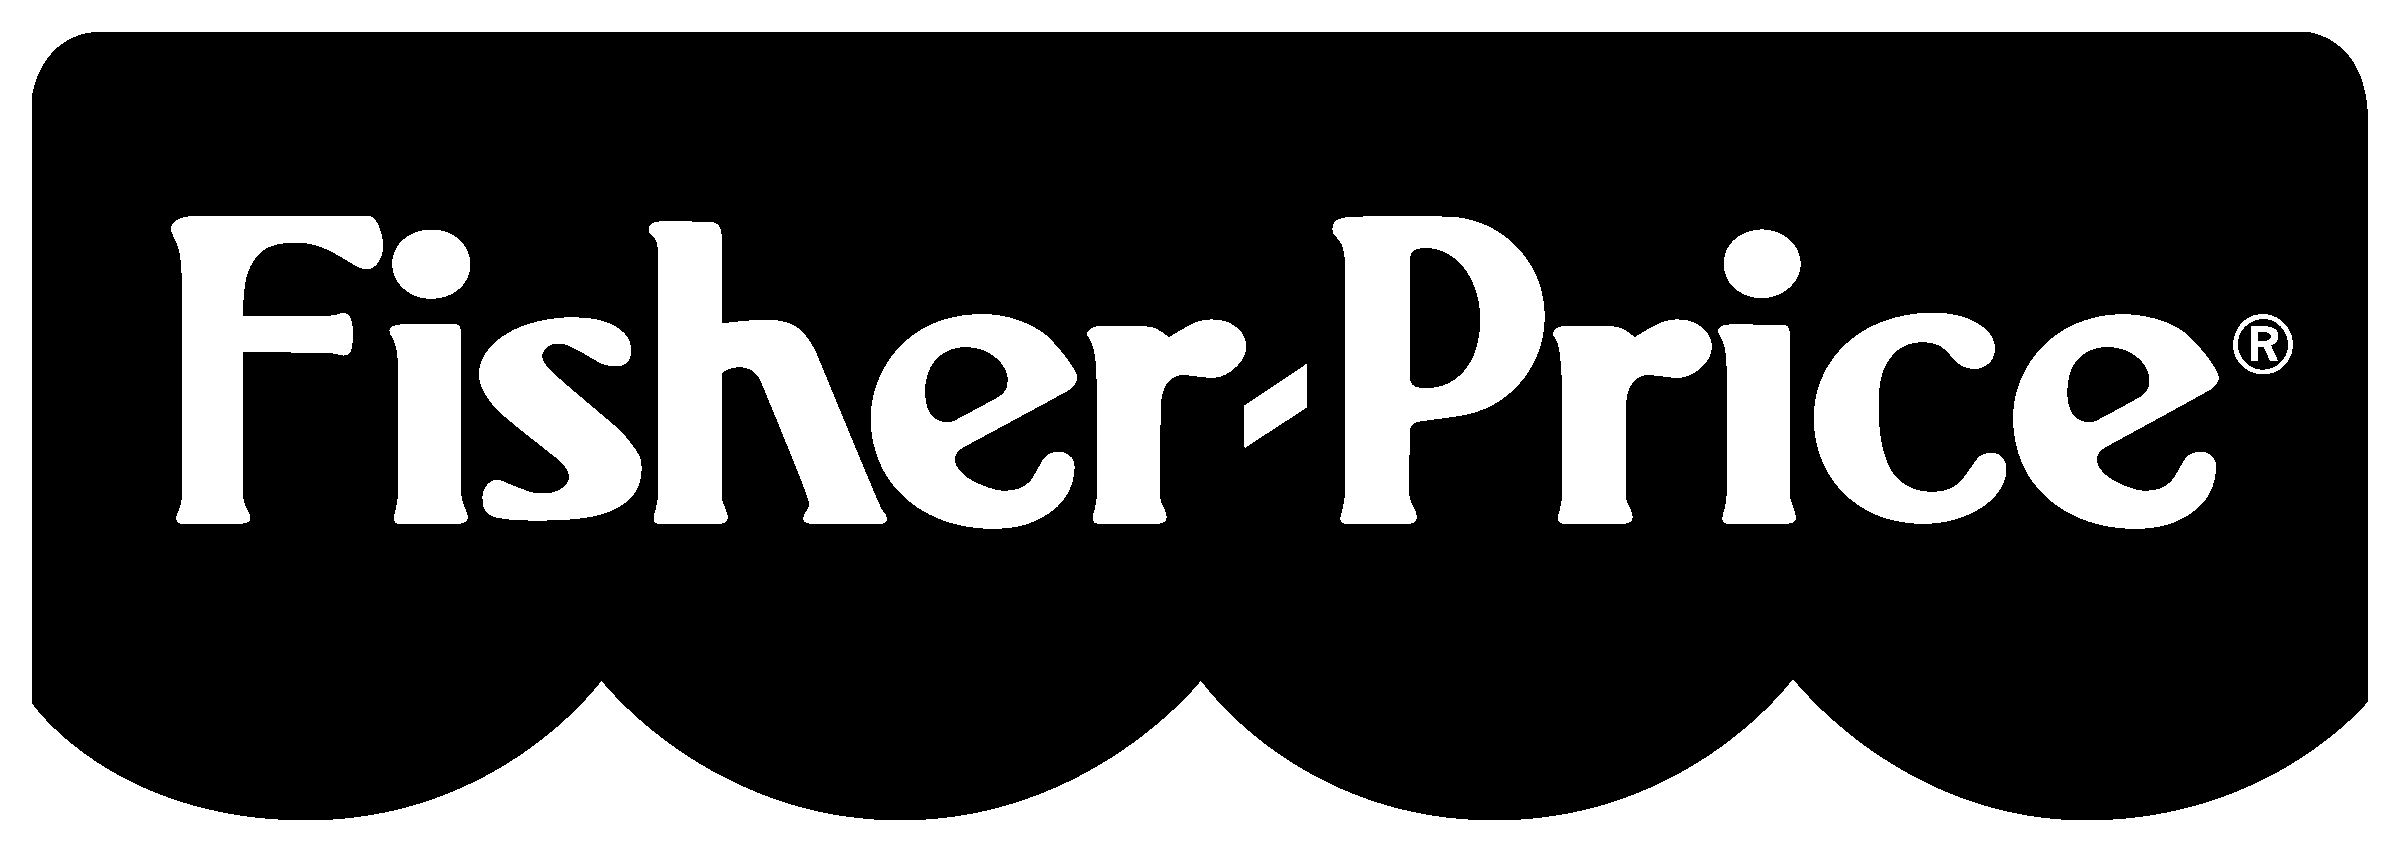 Fisher-Price Logo - Fisher Price Brand 1 Logo PNG Transparent & SVG Vector - Freebie Supply